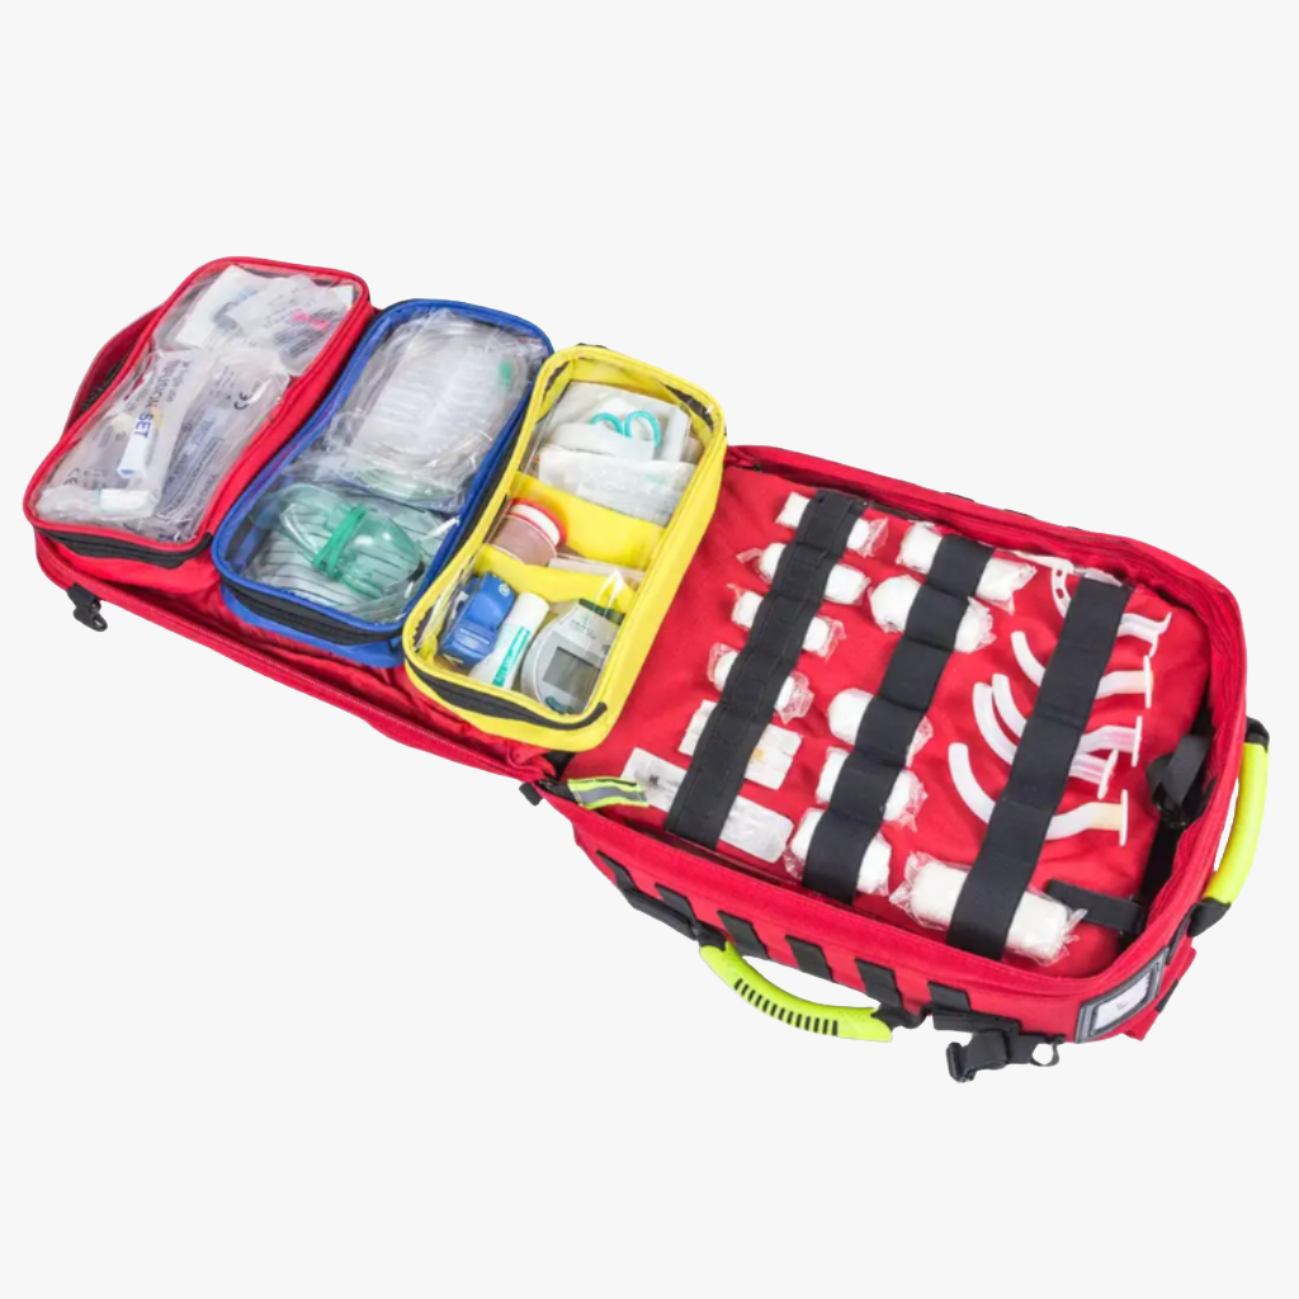 Elite Bags PARAMED emergency backpack red